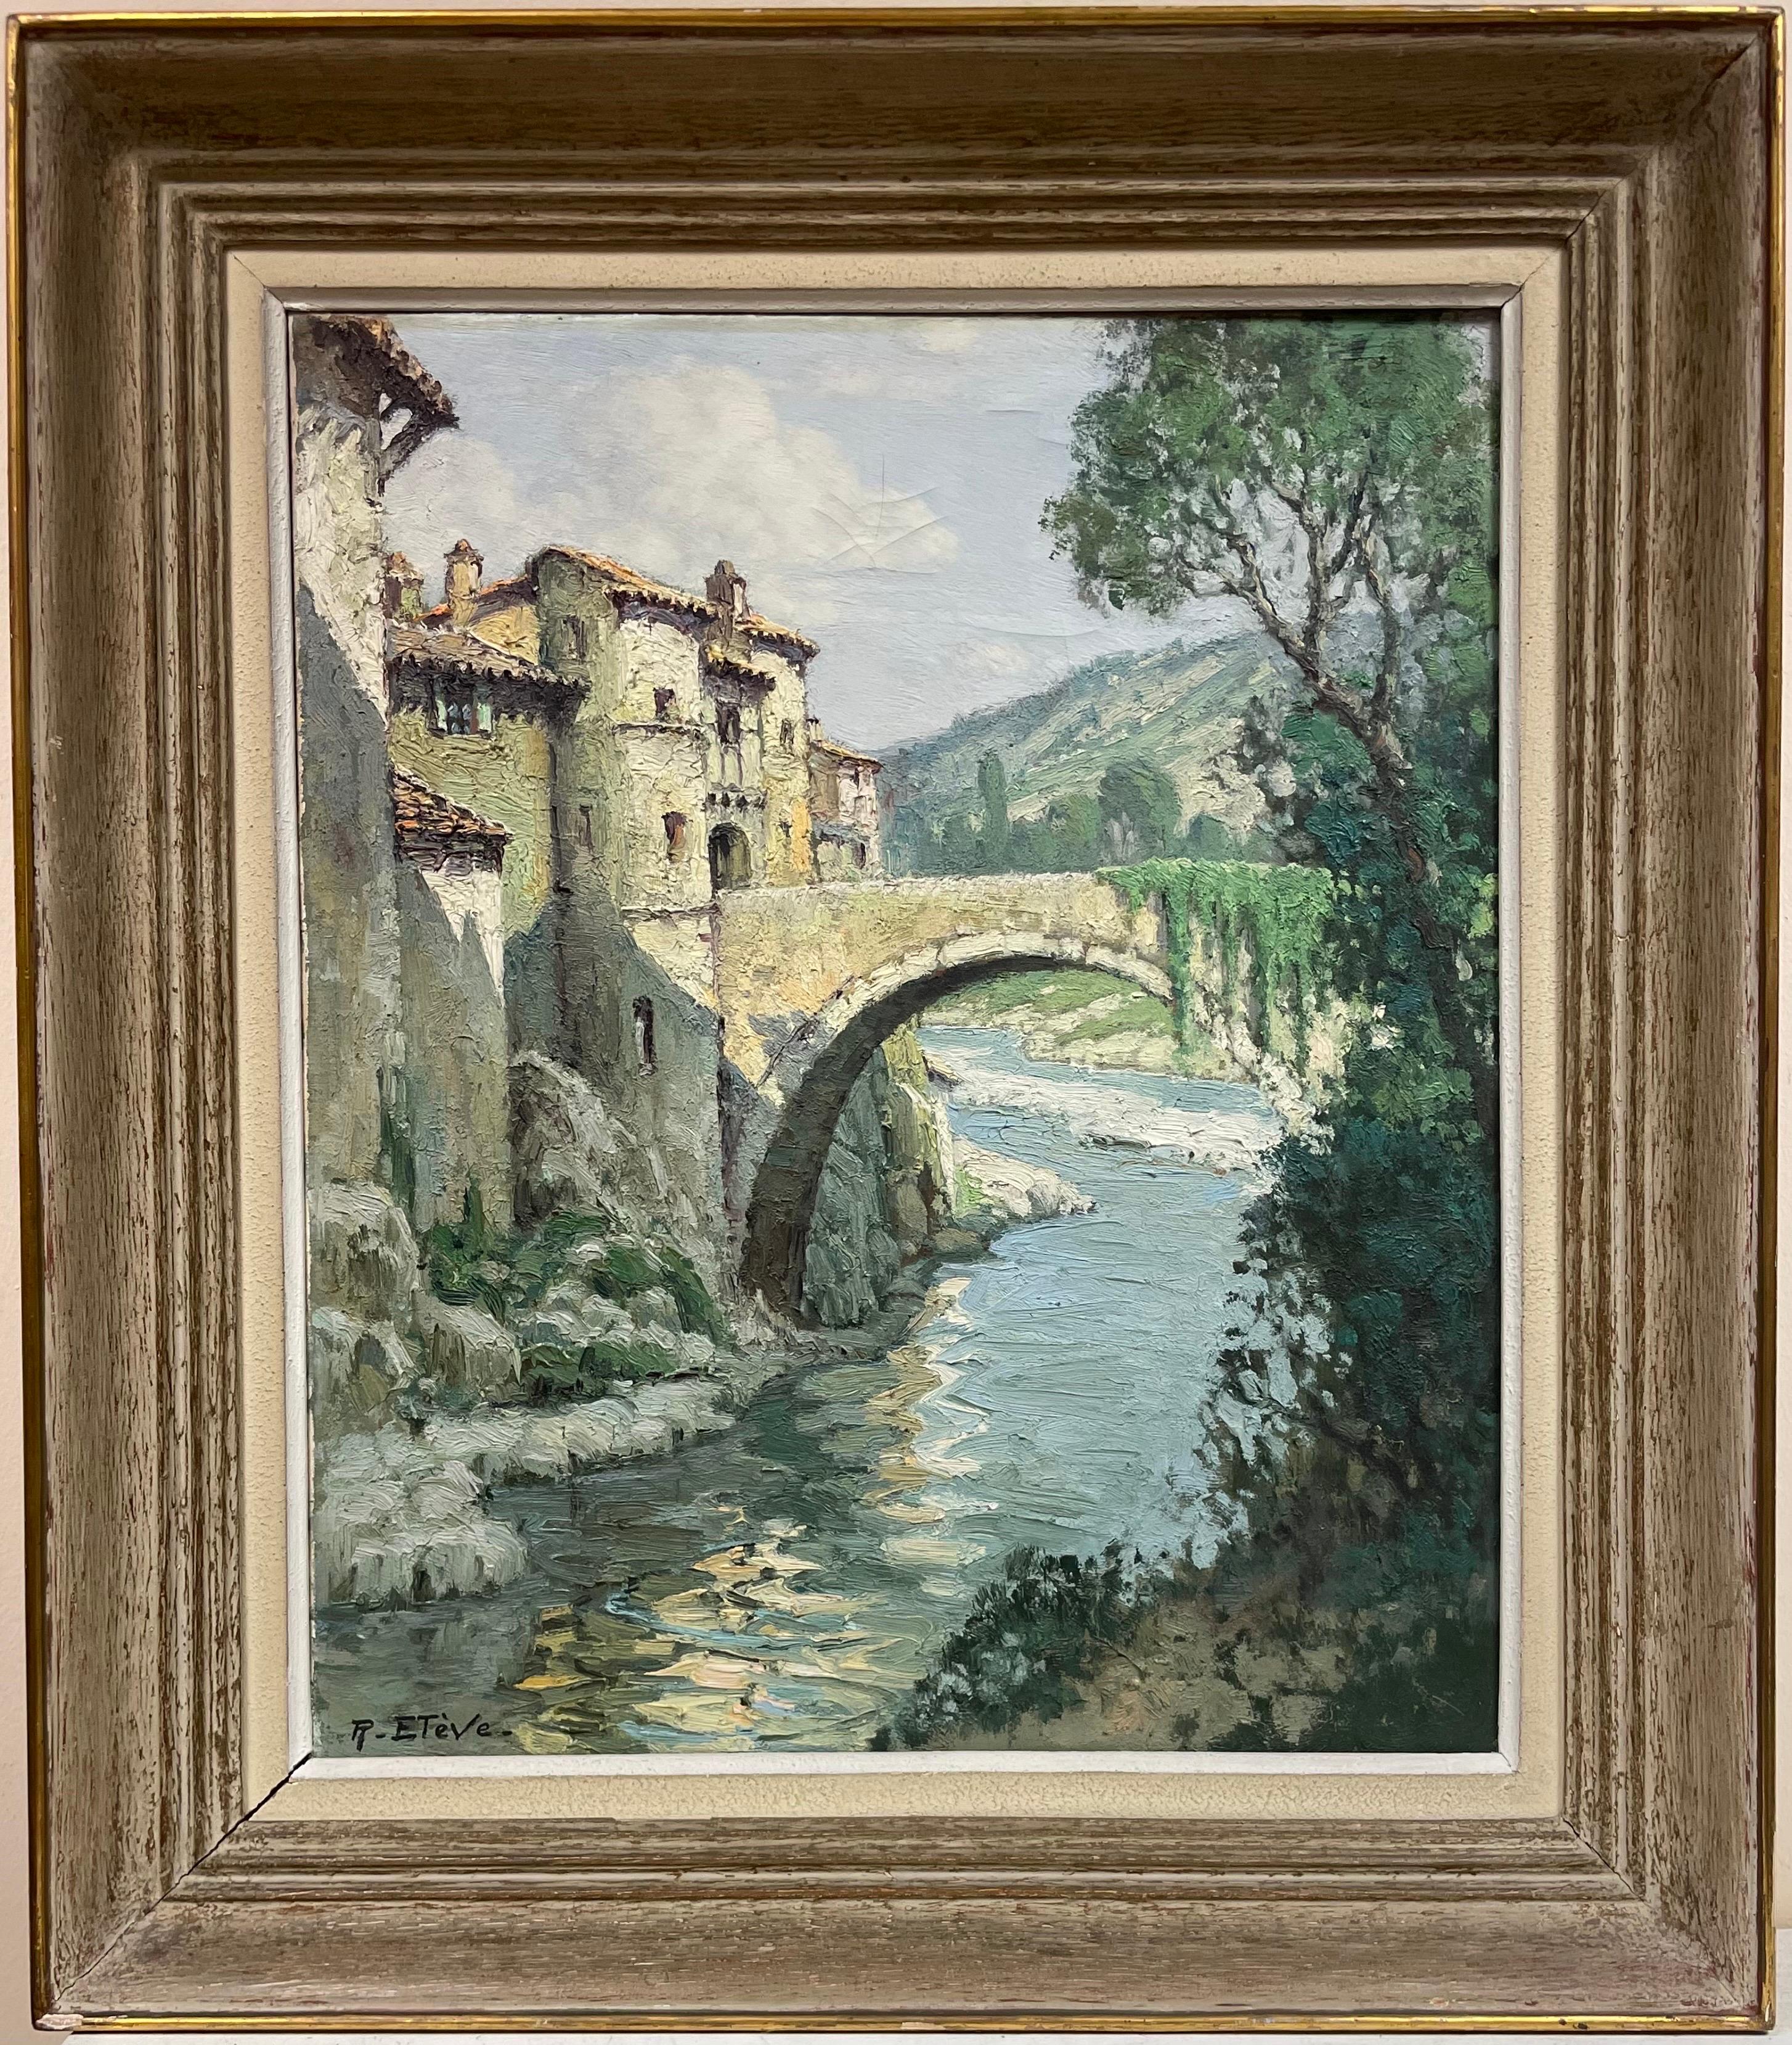 Felix Raoul Eteve Landscape Painting - Large 1950's French Impressionist Signed Old Bridge over River Landscape